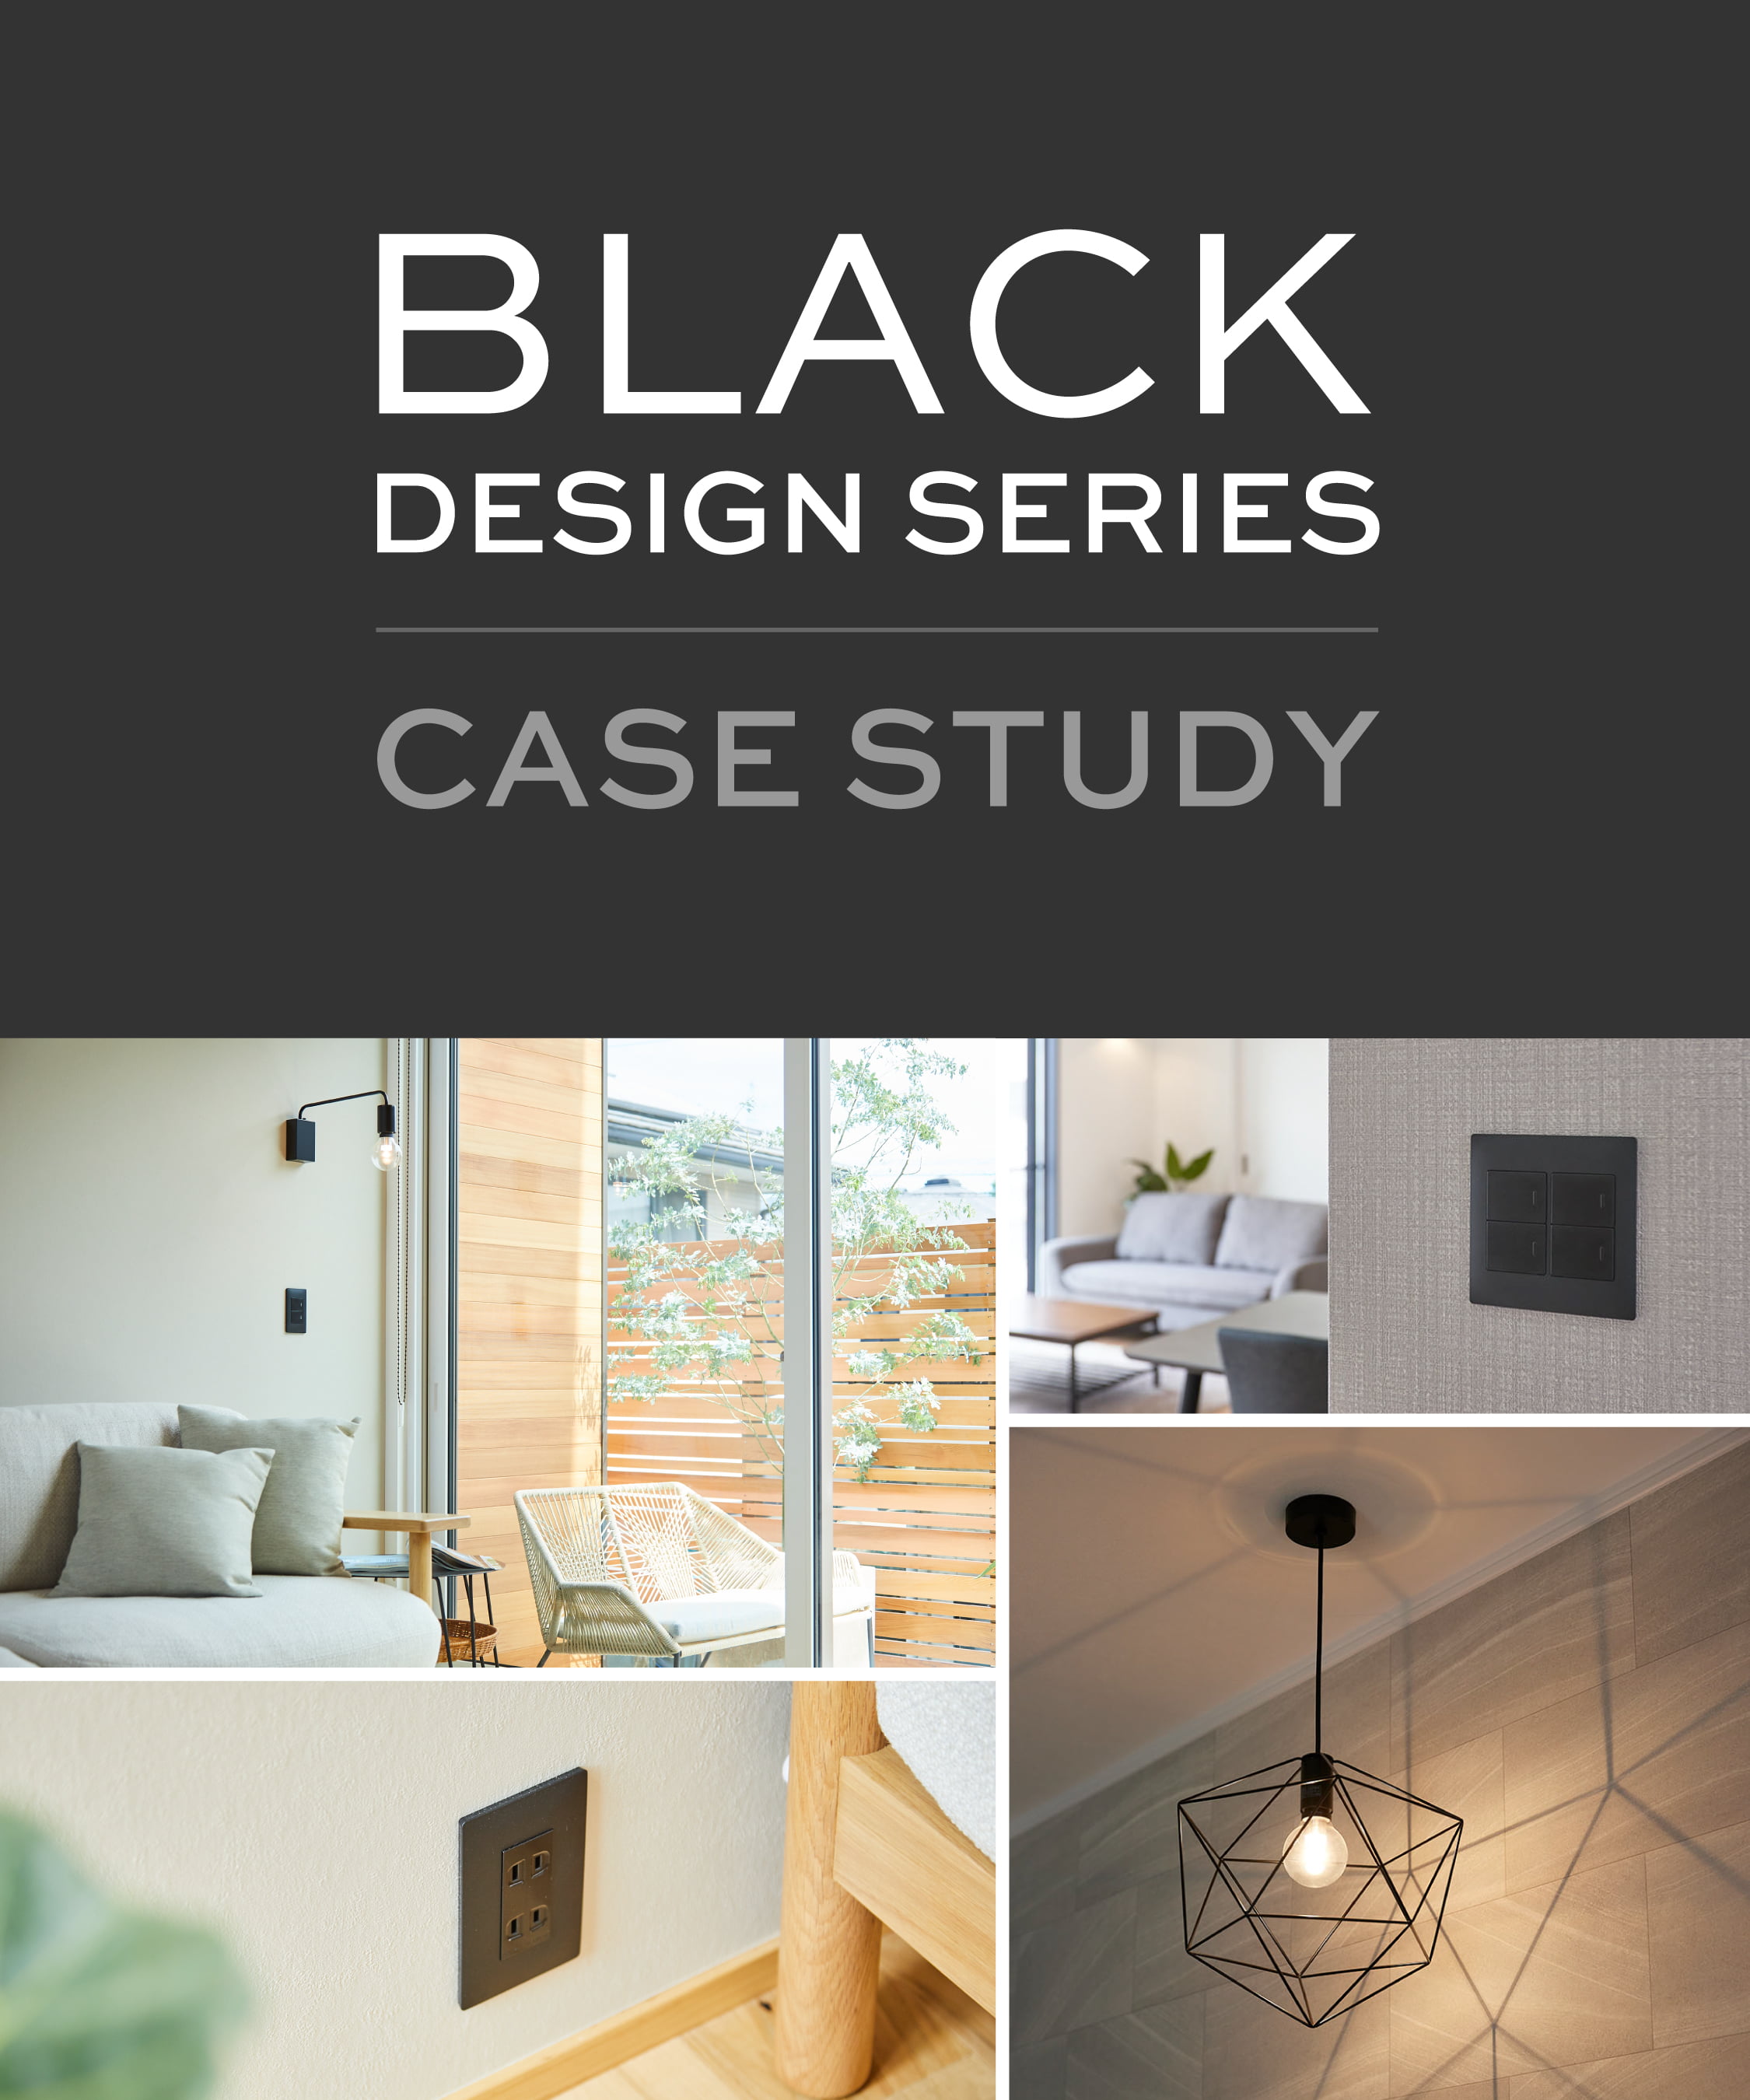 BLACK DESIGN SERIES CASE STUDY